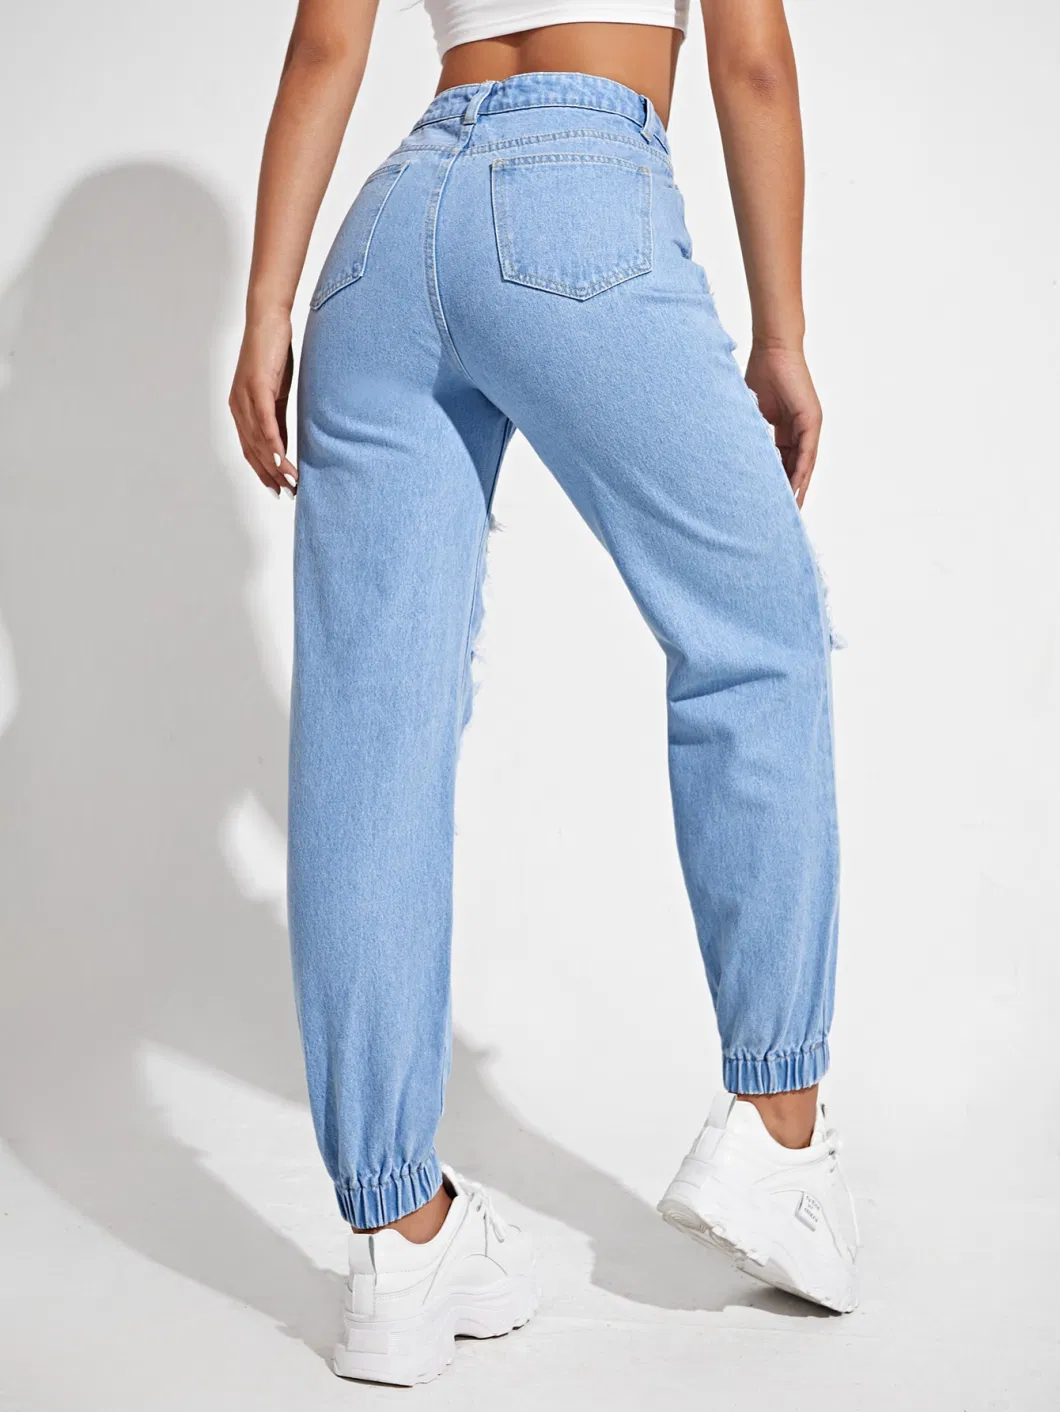 High Waisted Scratch Holes Non-Stretch Quality Elastane Bottom Hem New Fashion Lady Jeans Light-Blue Boyfrind Fit Jeans